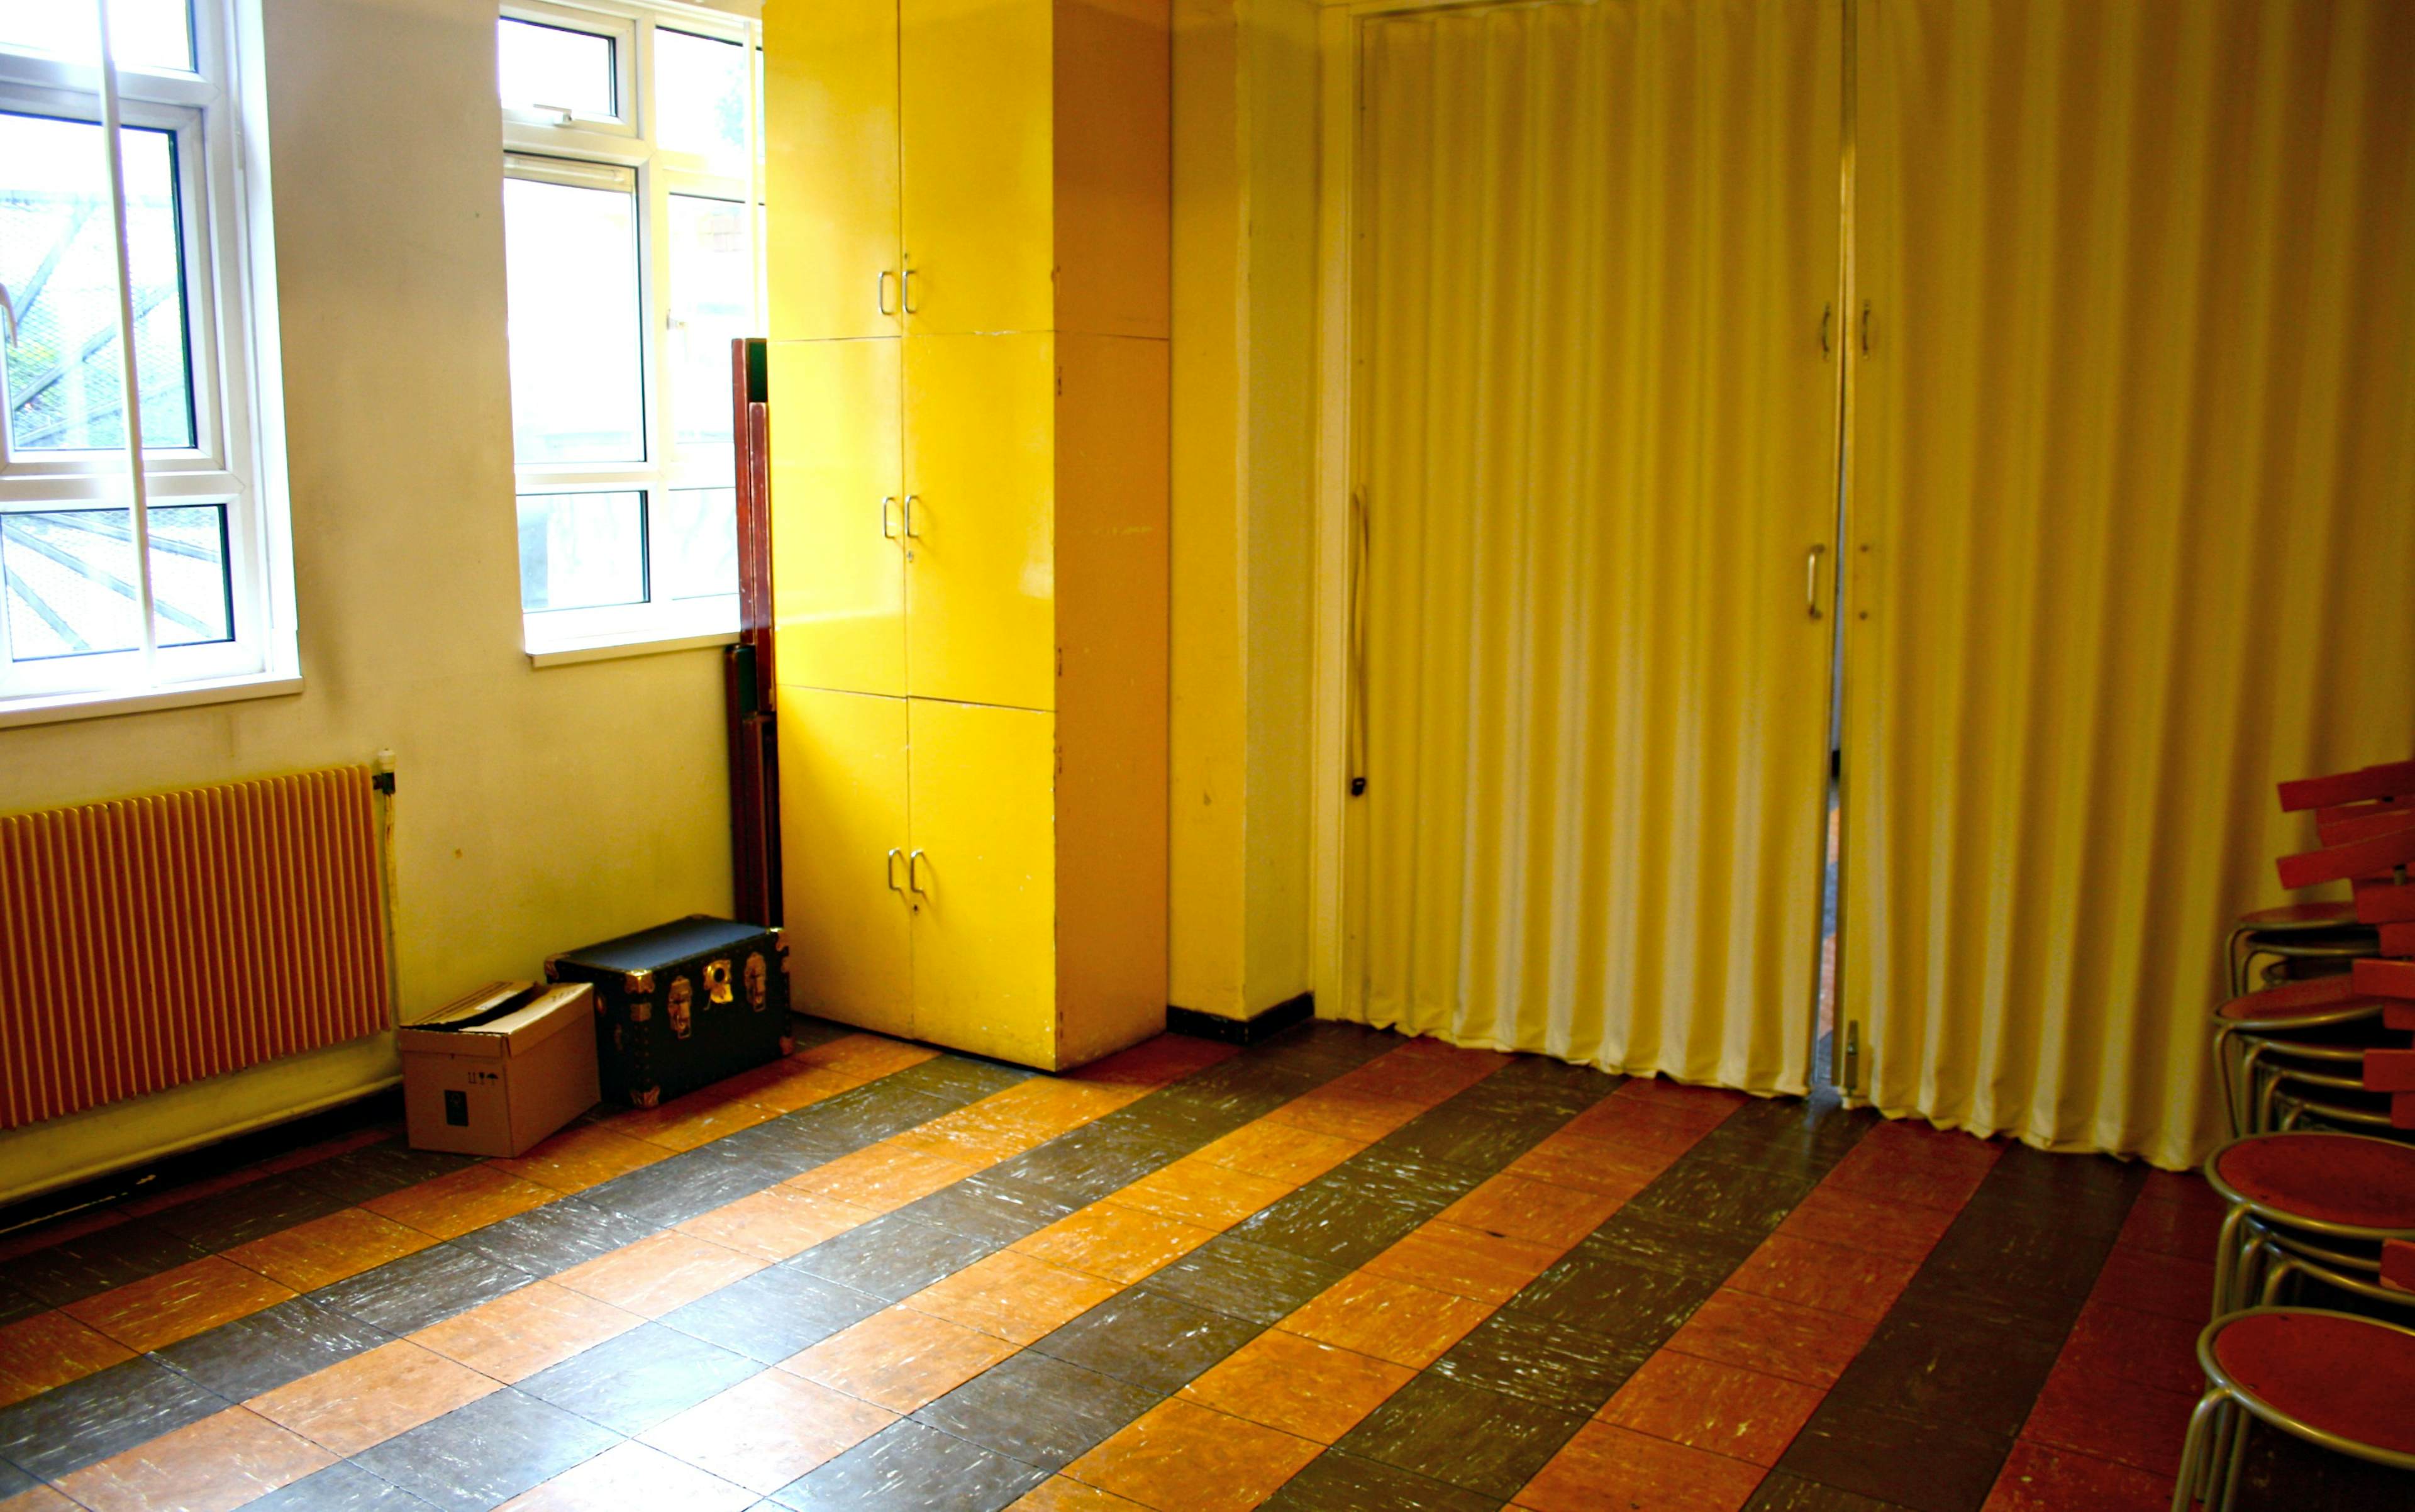 Chelsea Theatre - The Yellow Room image 1